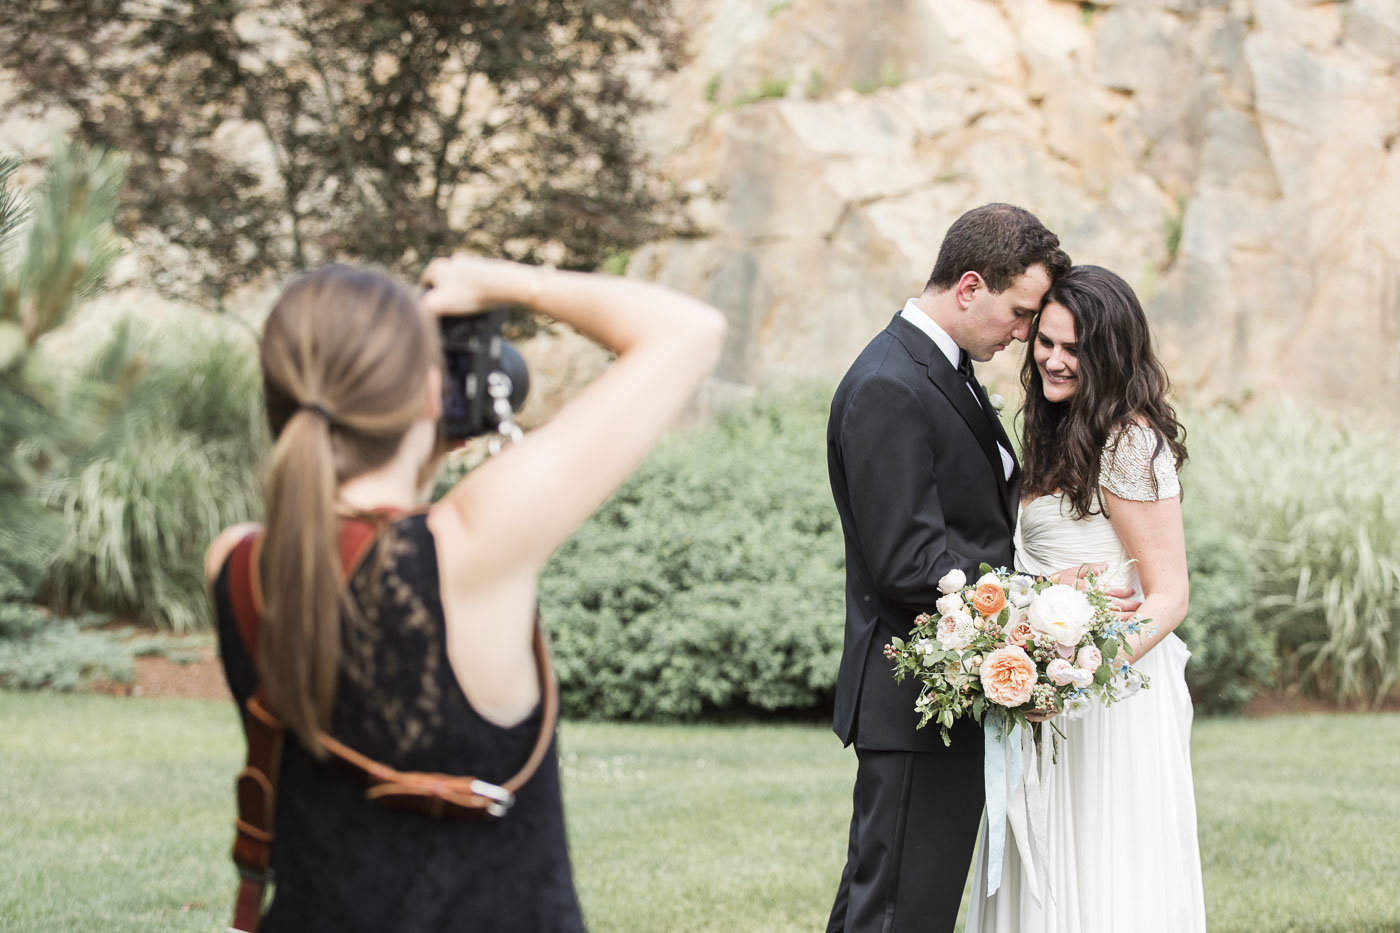 Lauren Dobish Photography taking picture of bride and groom